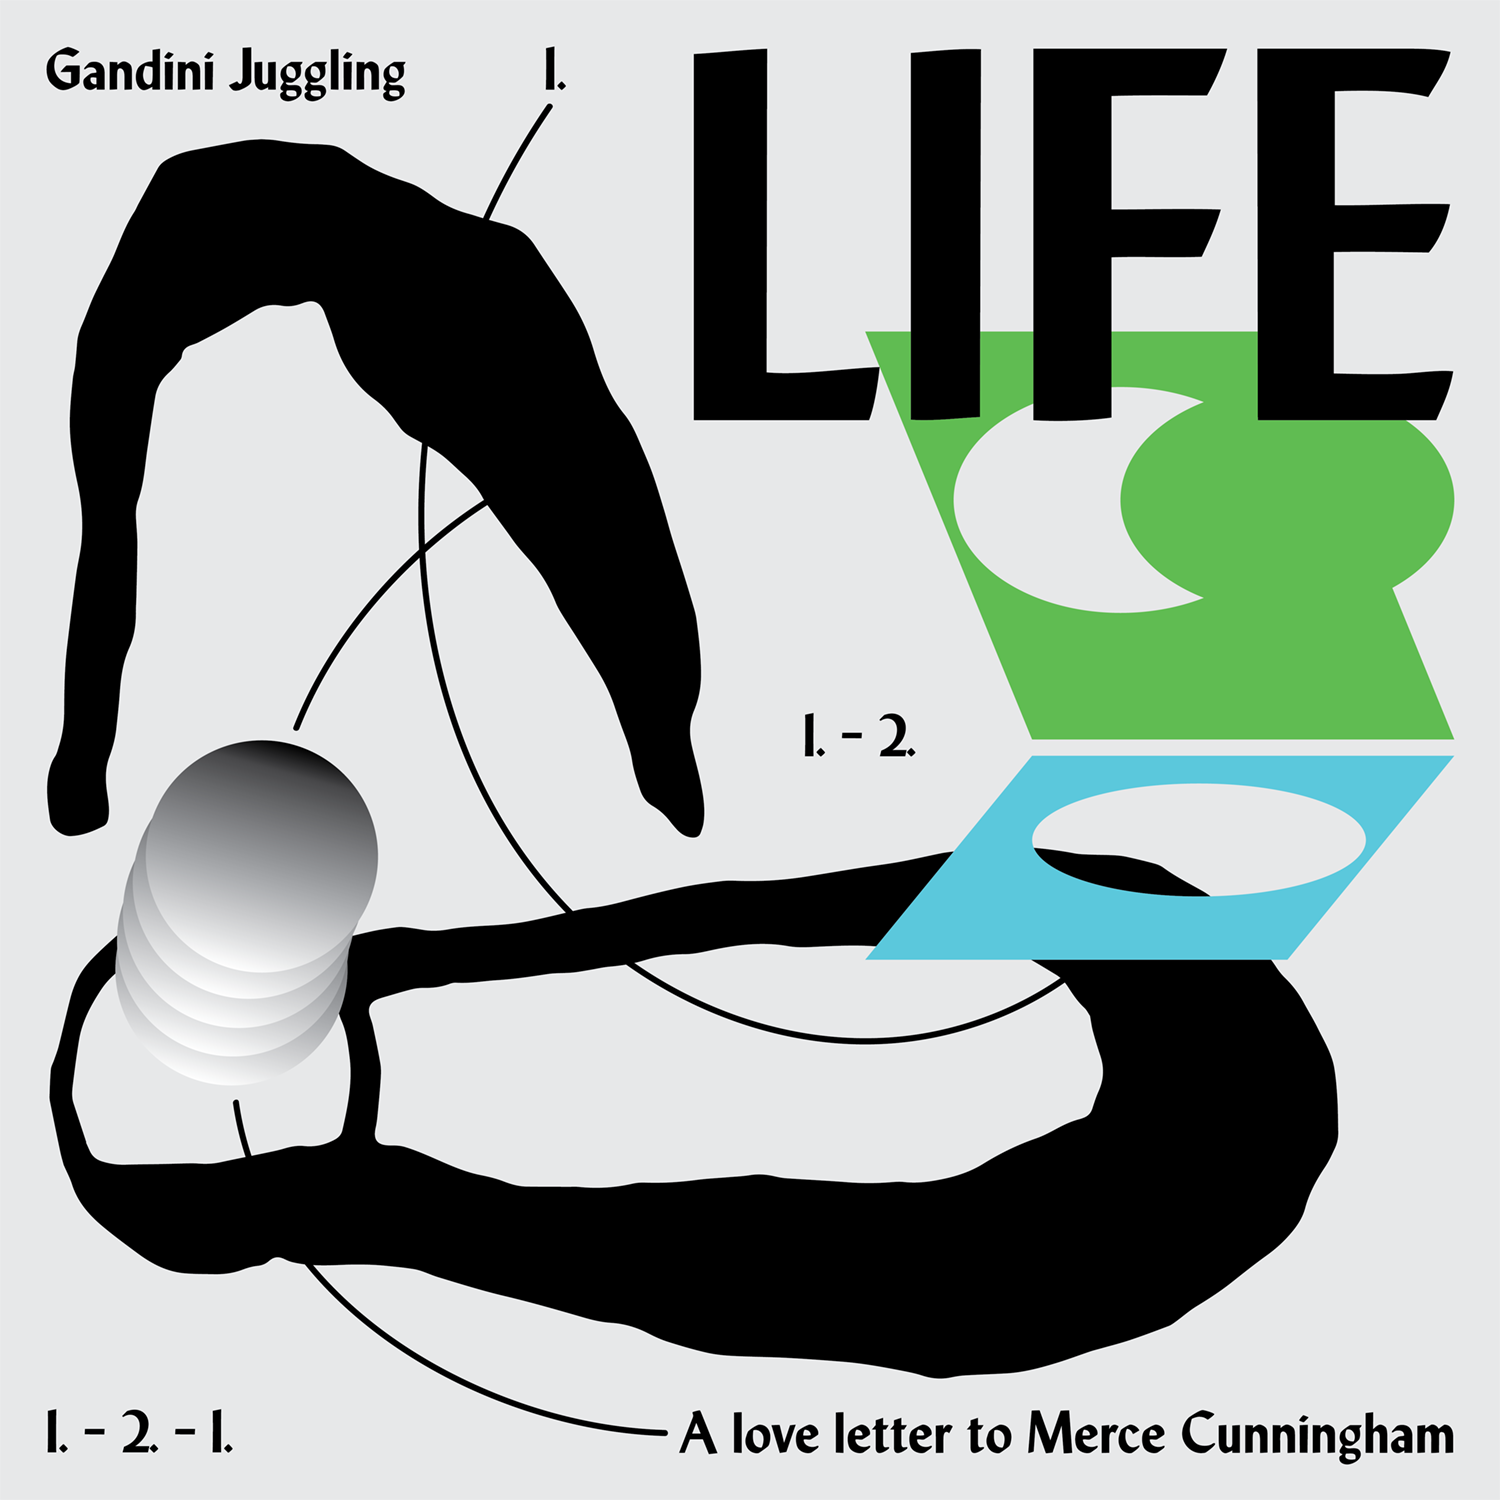 LIFE, Gandini Juggling: series II